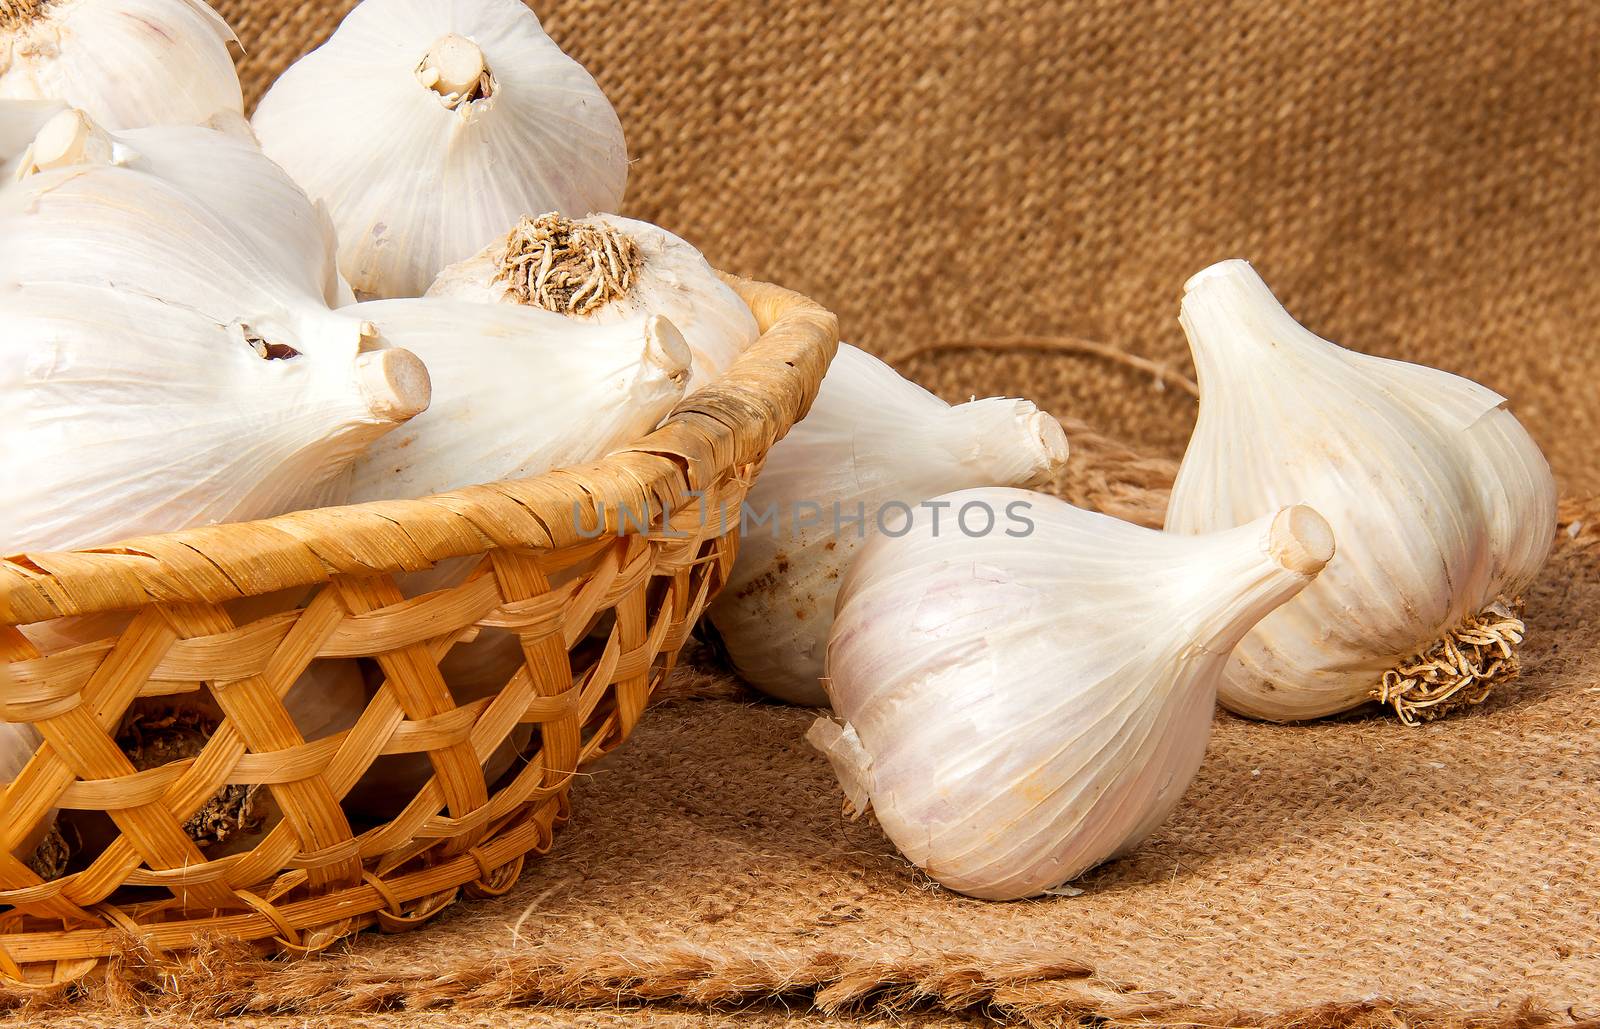 Whole head of garlic in a wicker basket by Cipariss